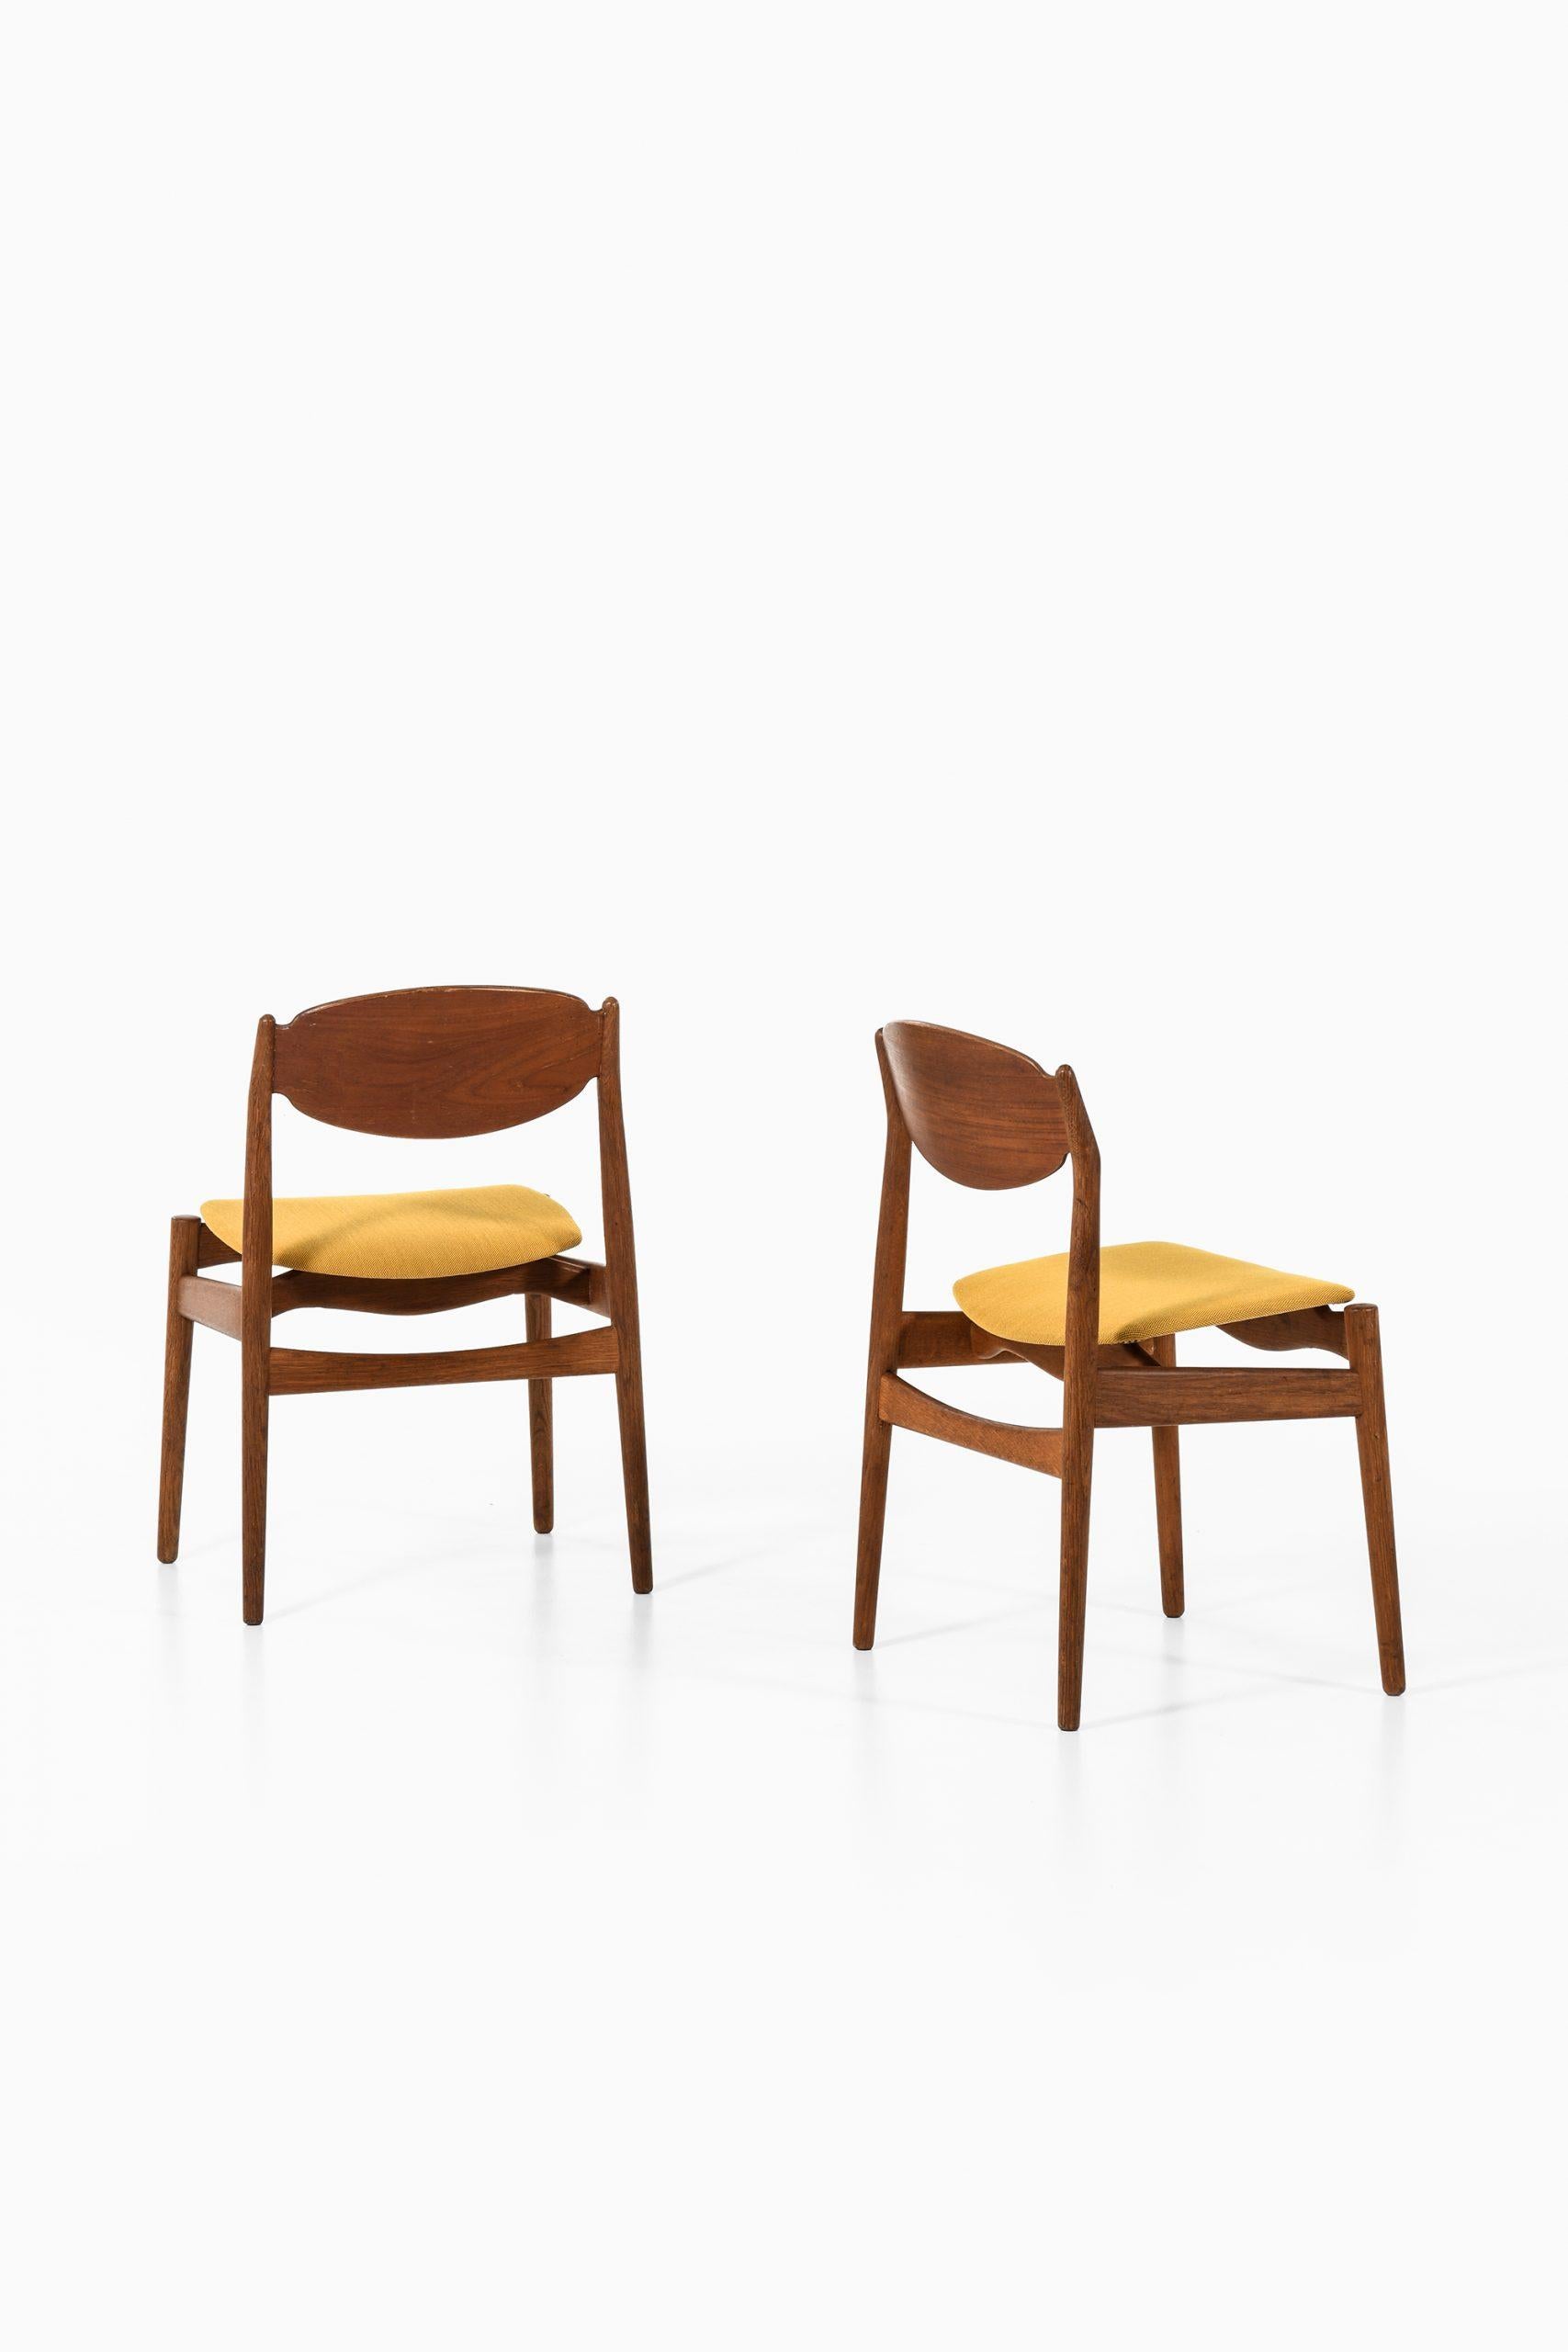 Erik Buck Dining Chairs Produced by Vamo Møbelfabrik in Denmark In Good Condition For Sale In Limhamn, Skåne län